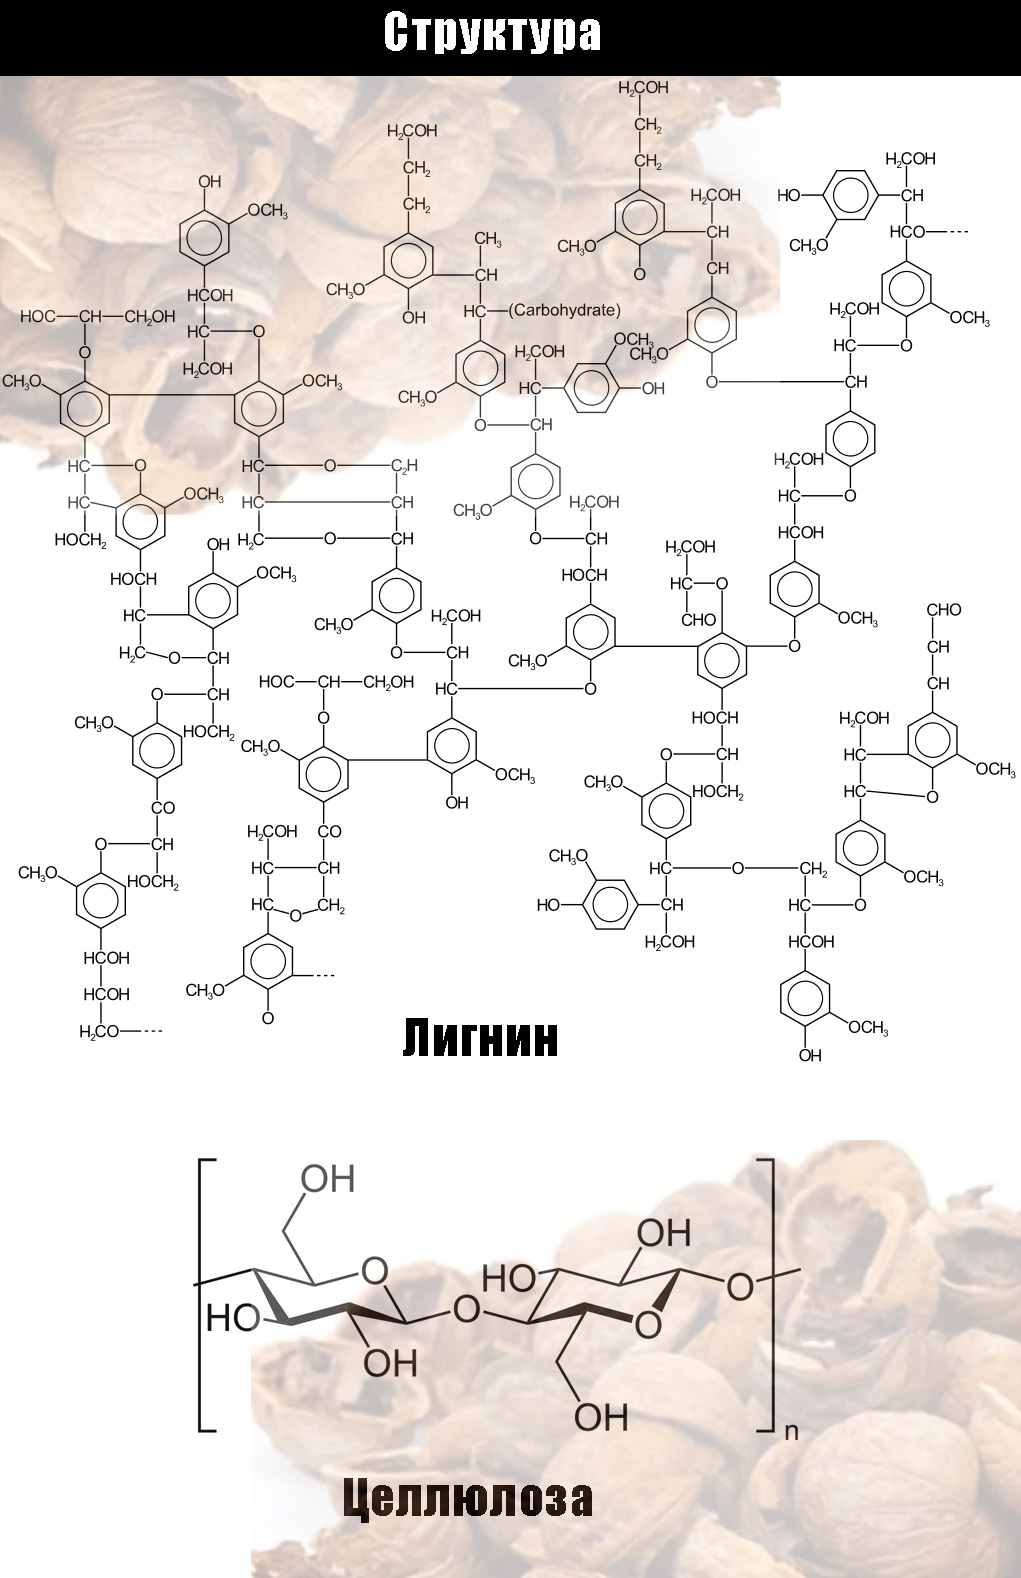 Walnut Chemistry - My, Chemistry, League of chemists, Nuts, Walnuts, Organic, Food, Longpost